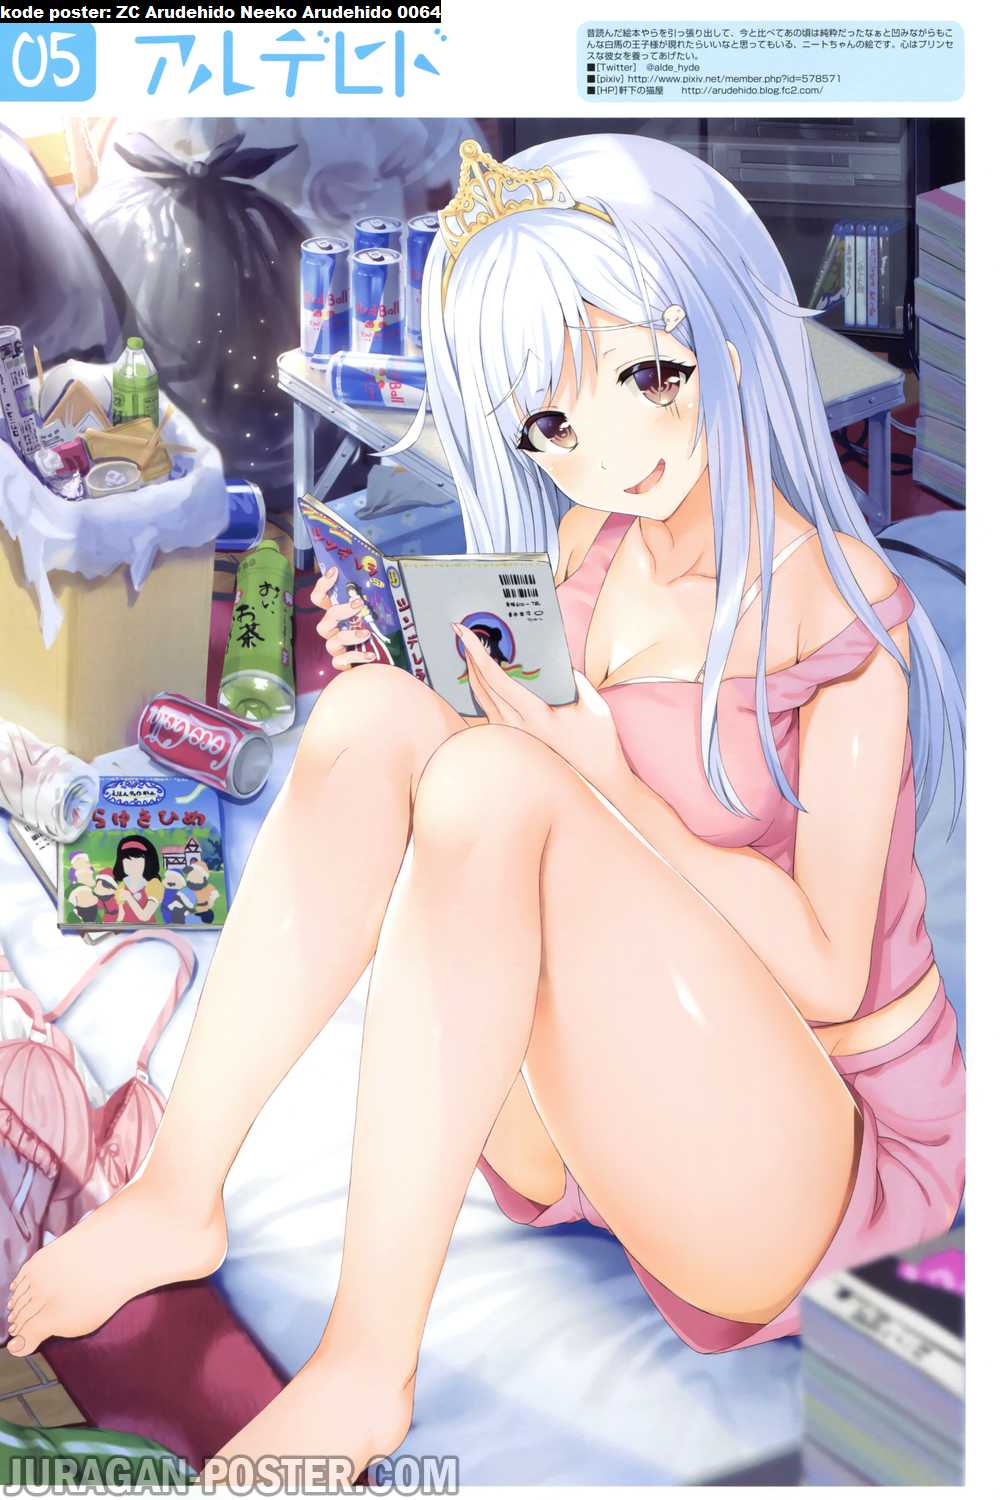 Arudehido Neeko Arudehido 0064 Jual Poster Anime